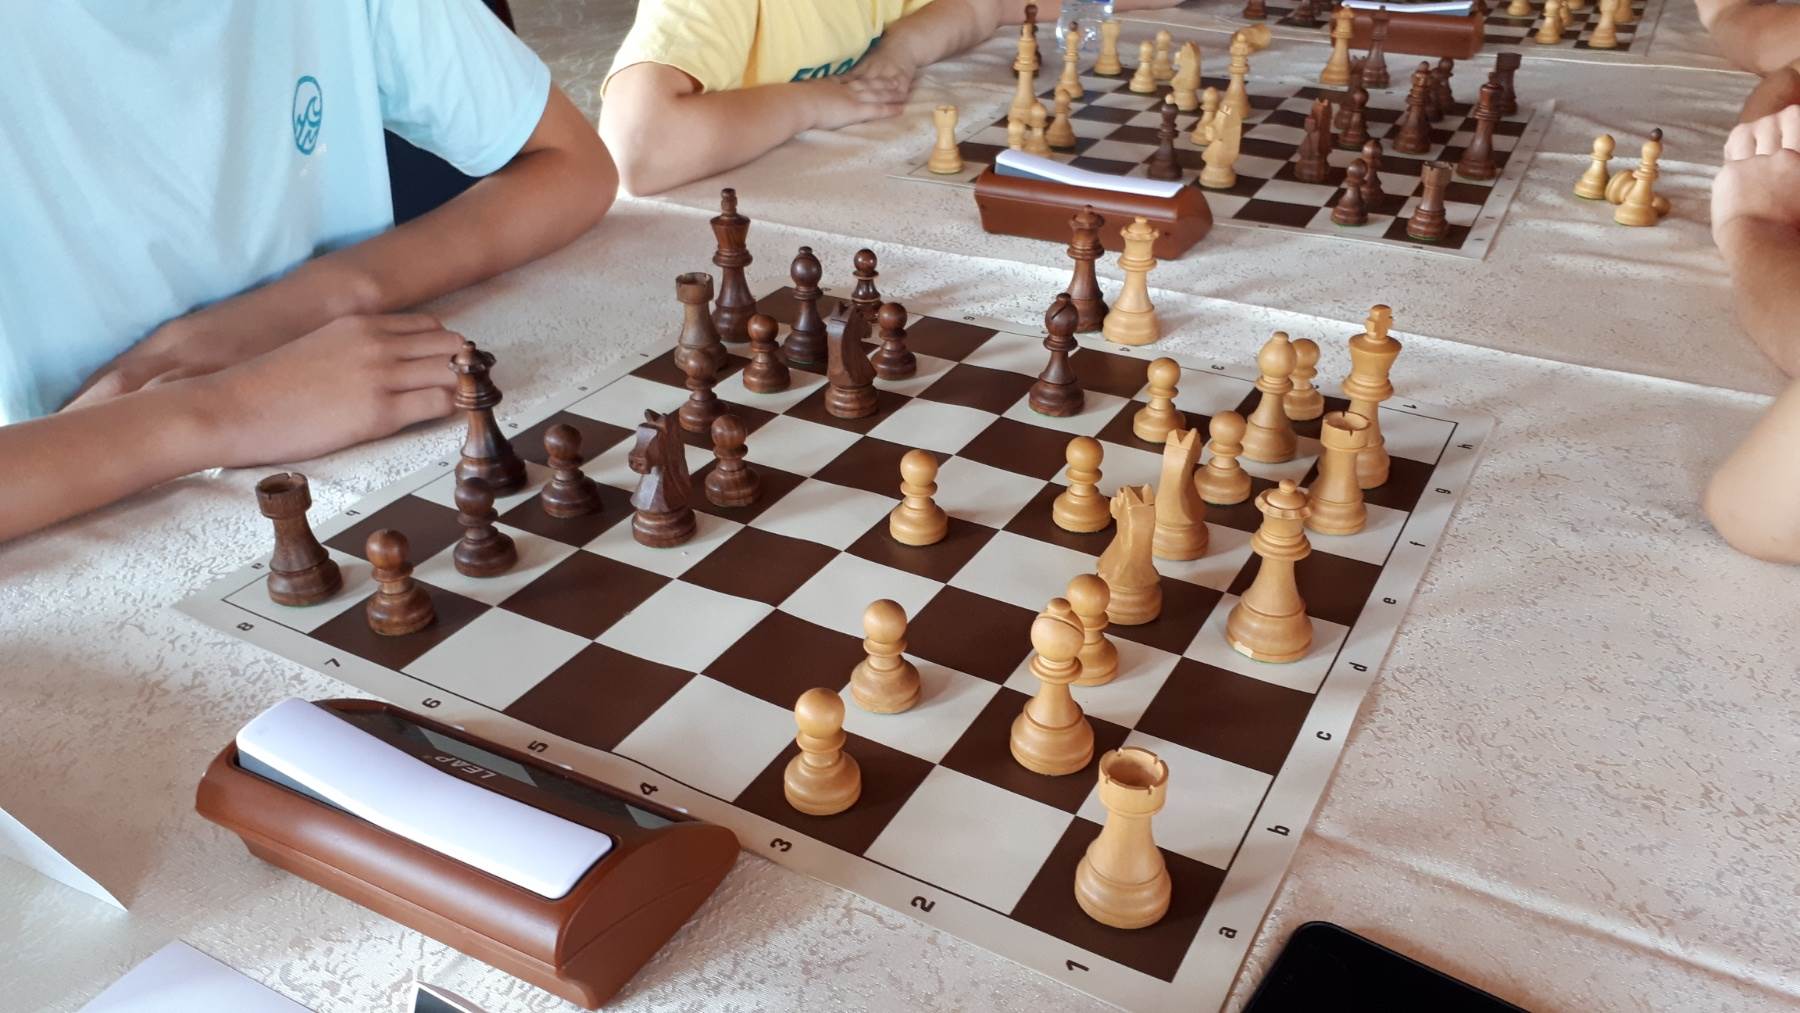  Završen drugi Međunarodni šahovski festival "Trofej Banjaluke" 